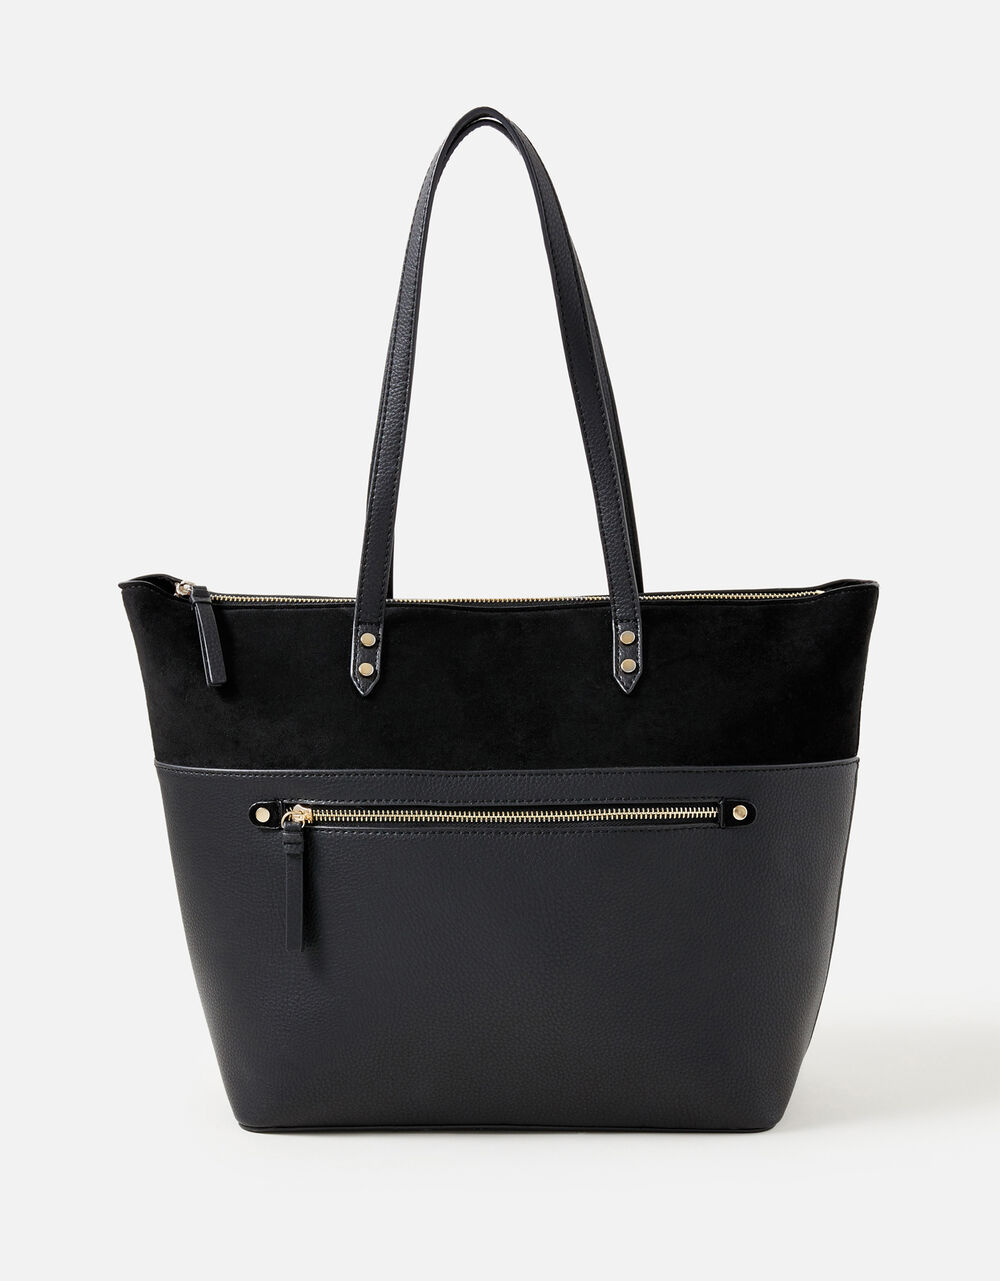 Molly Tote Bag | Tote & Shopper bags | Accessorize UK